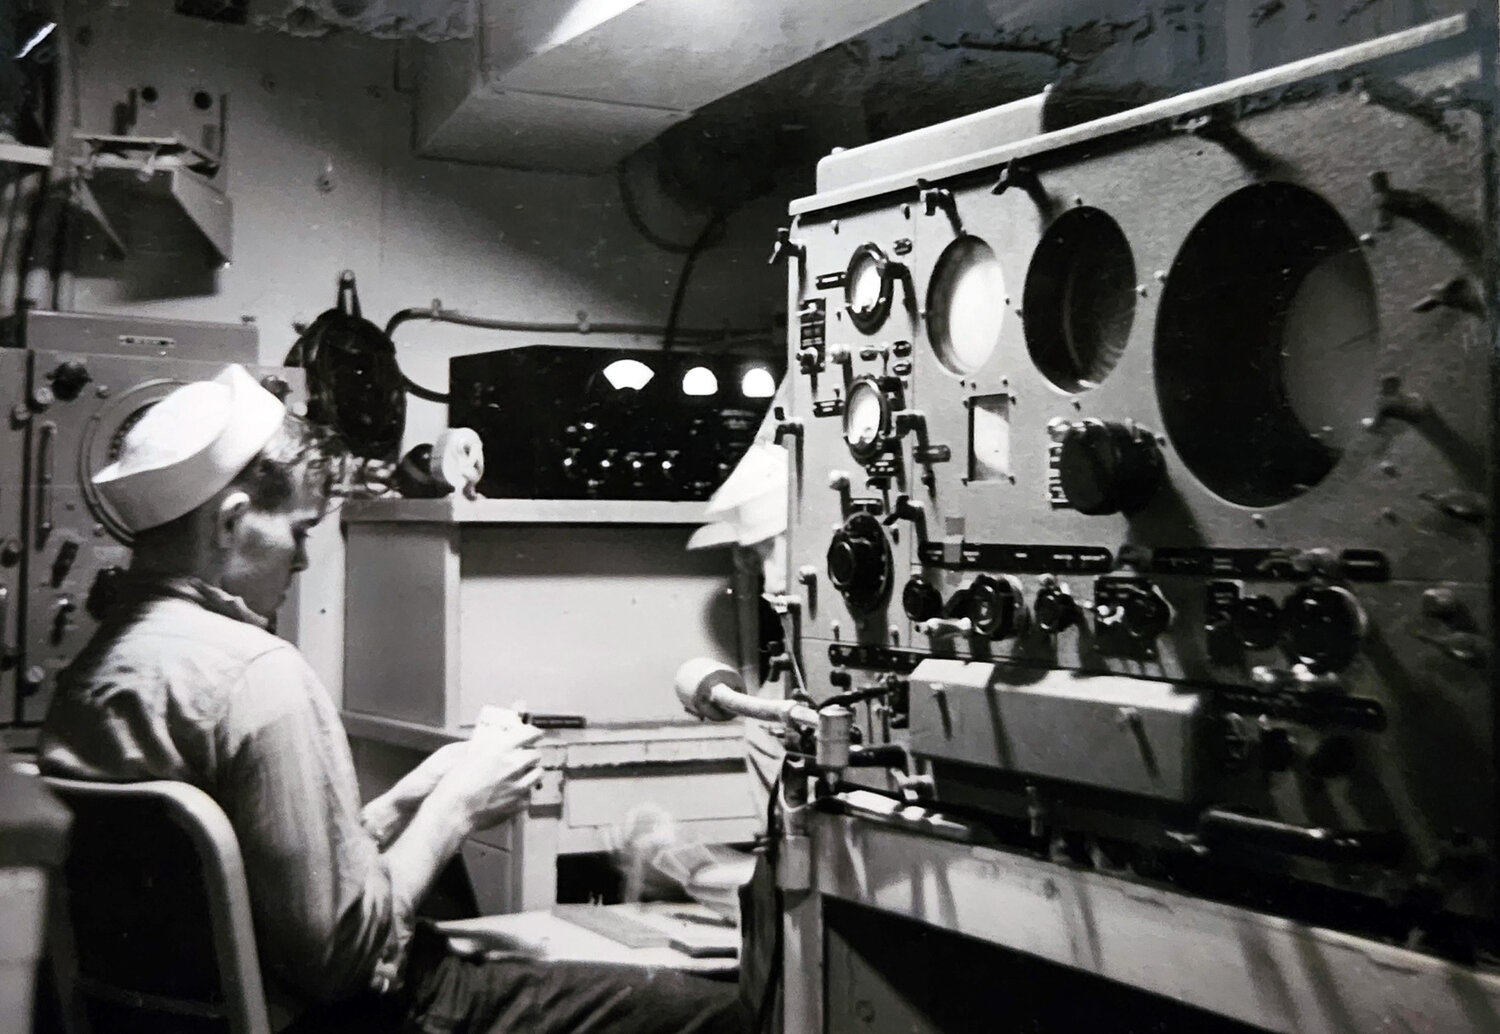 Bill Murdock is pictured working as a radar operator in the U.S. Navy.